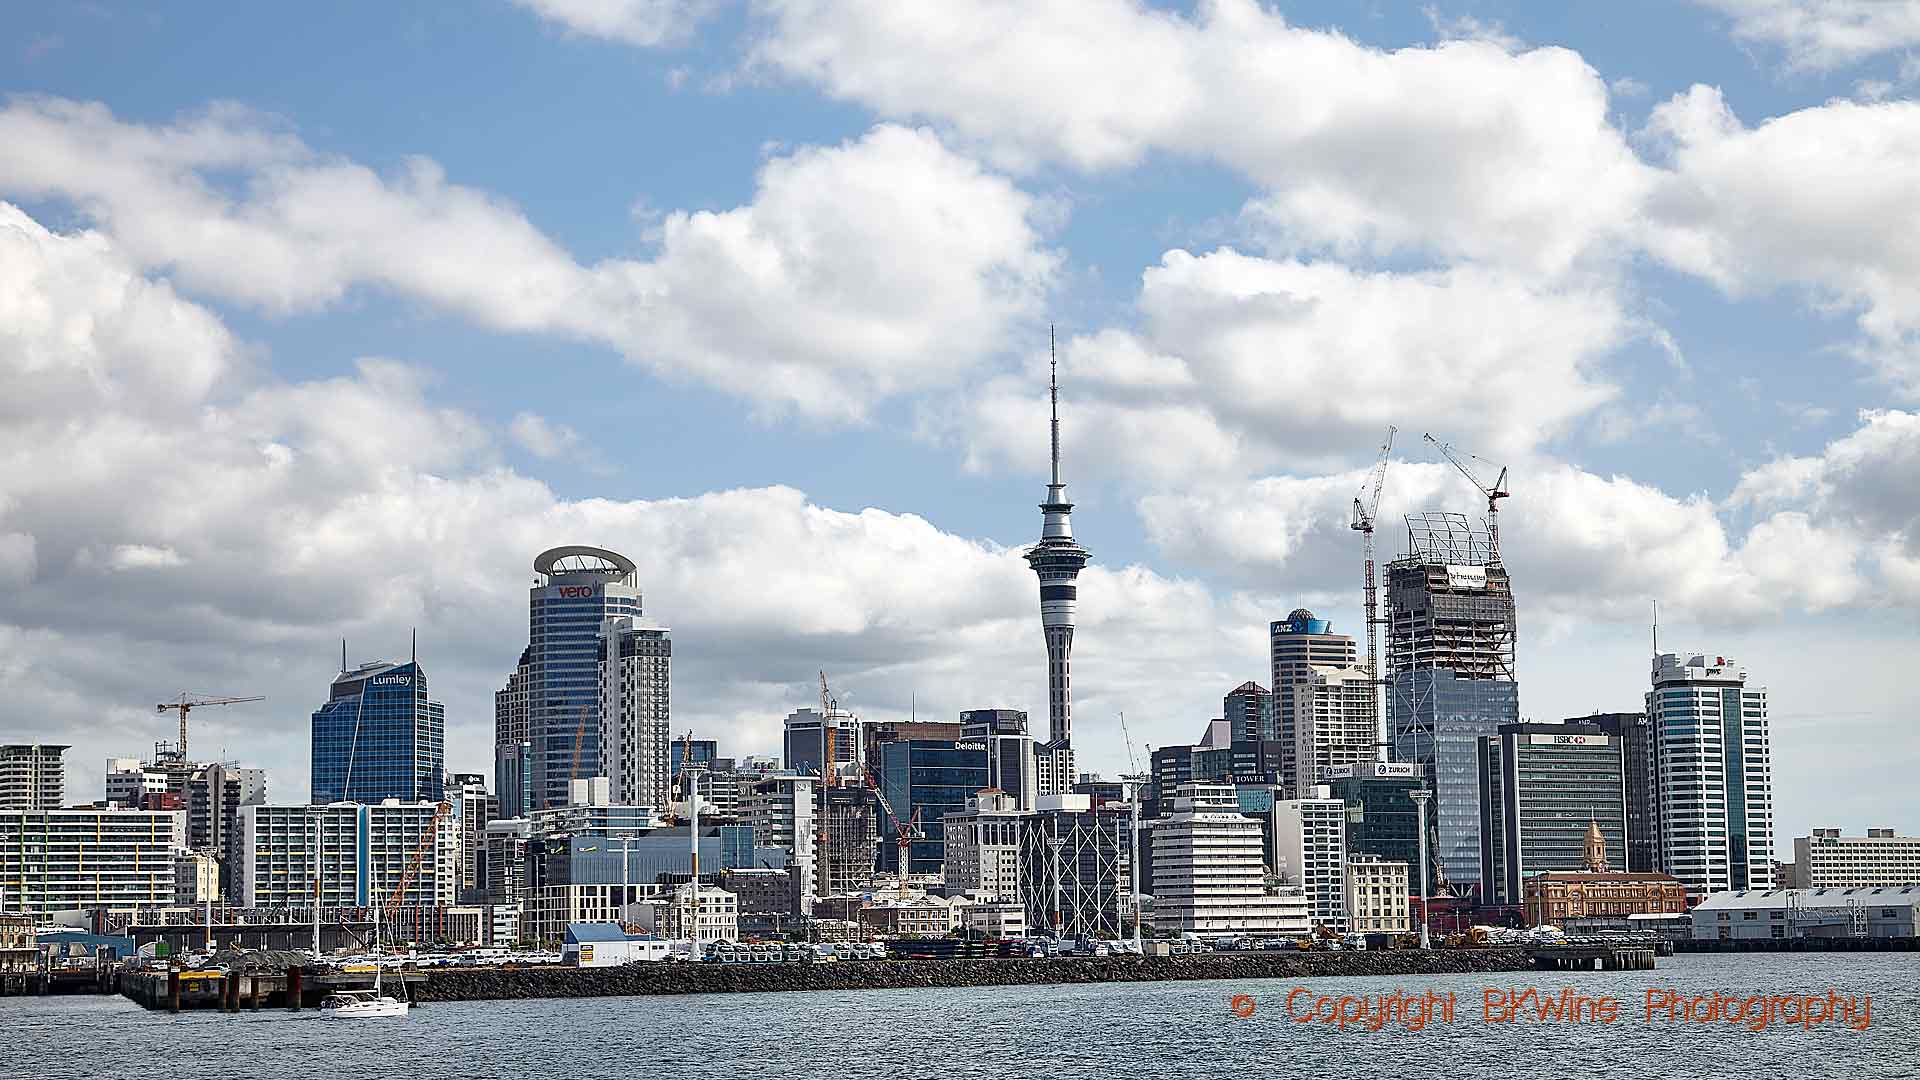 Aucklands skyline